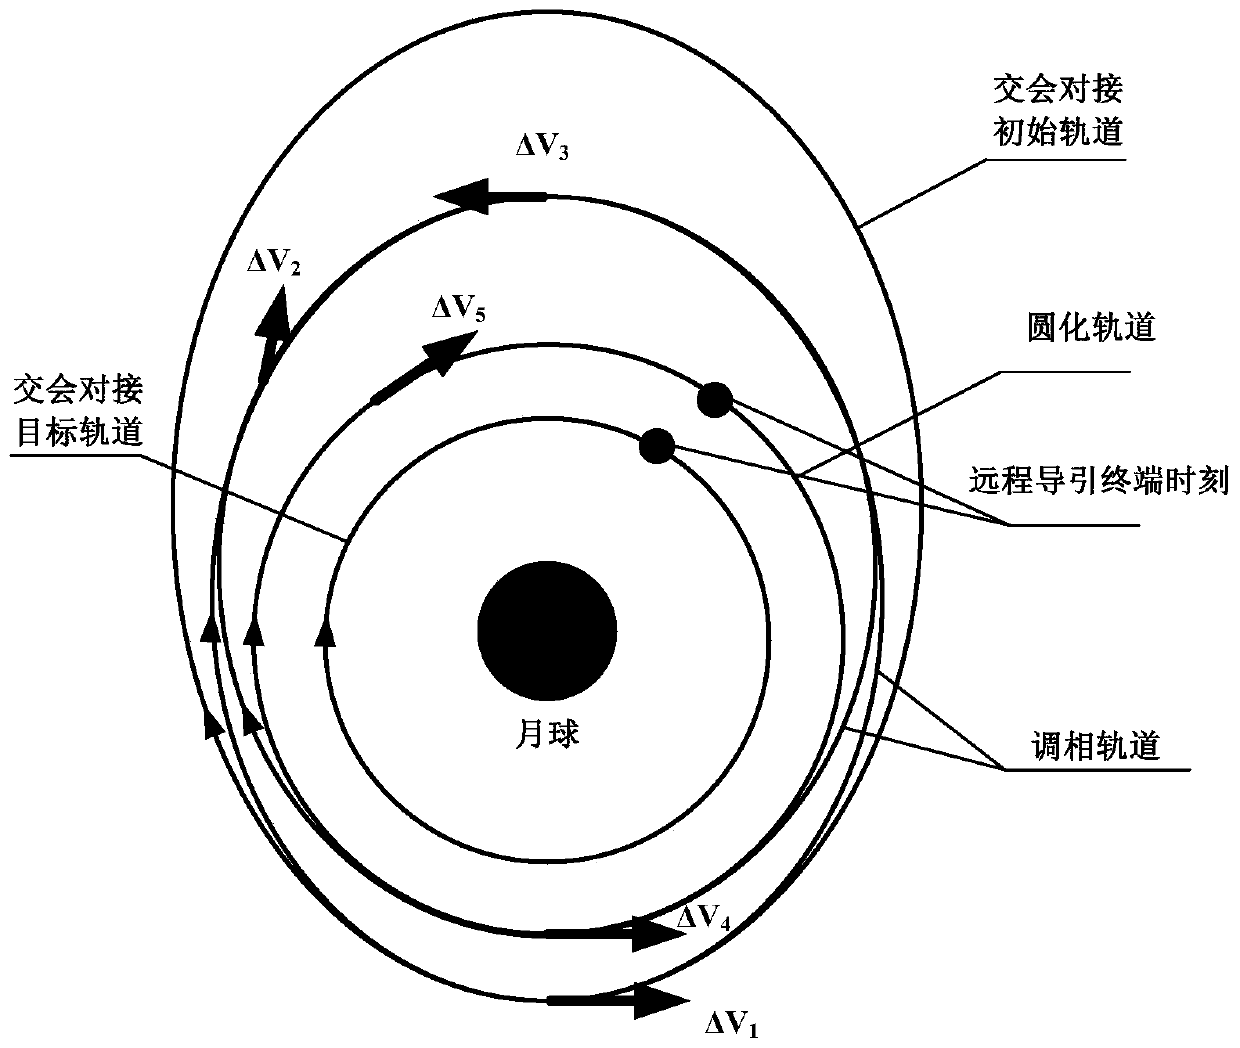 Orbit design method for spacecraft lunar orbit rendezvous and docking